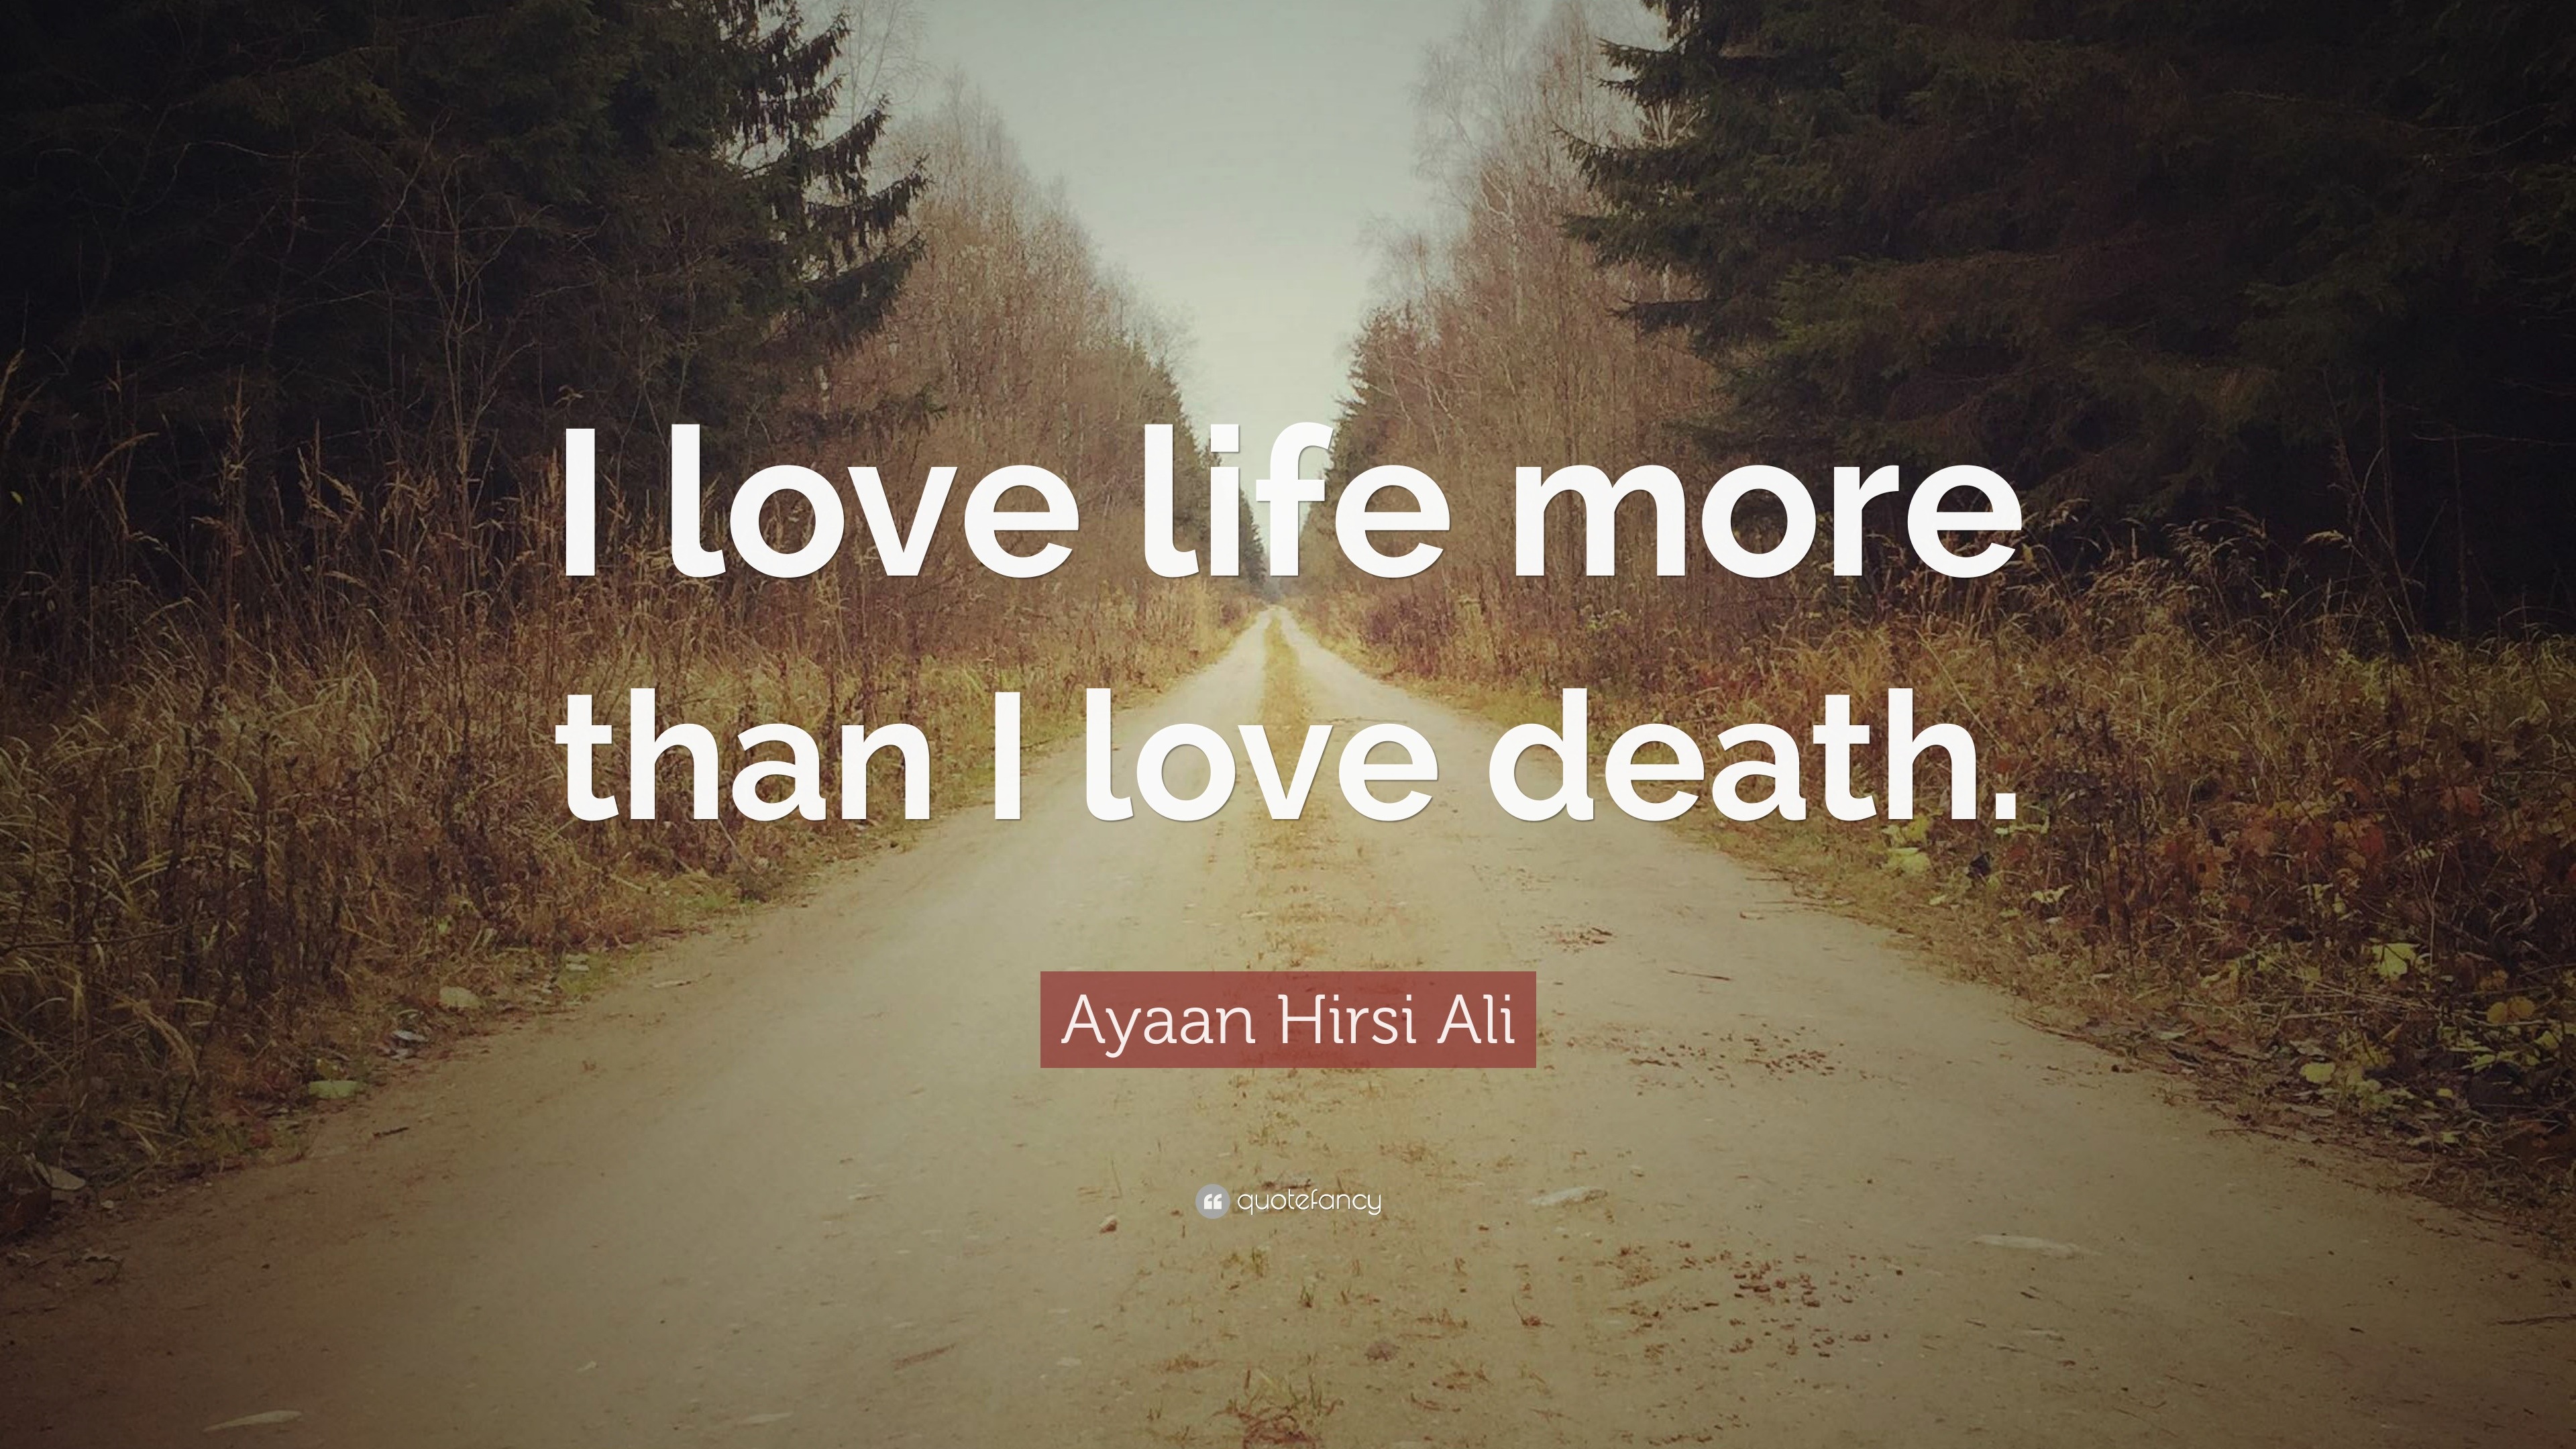 Ayaan Hirsi Ali Quote “I love life more than I love ”